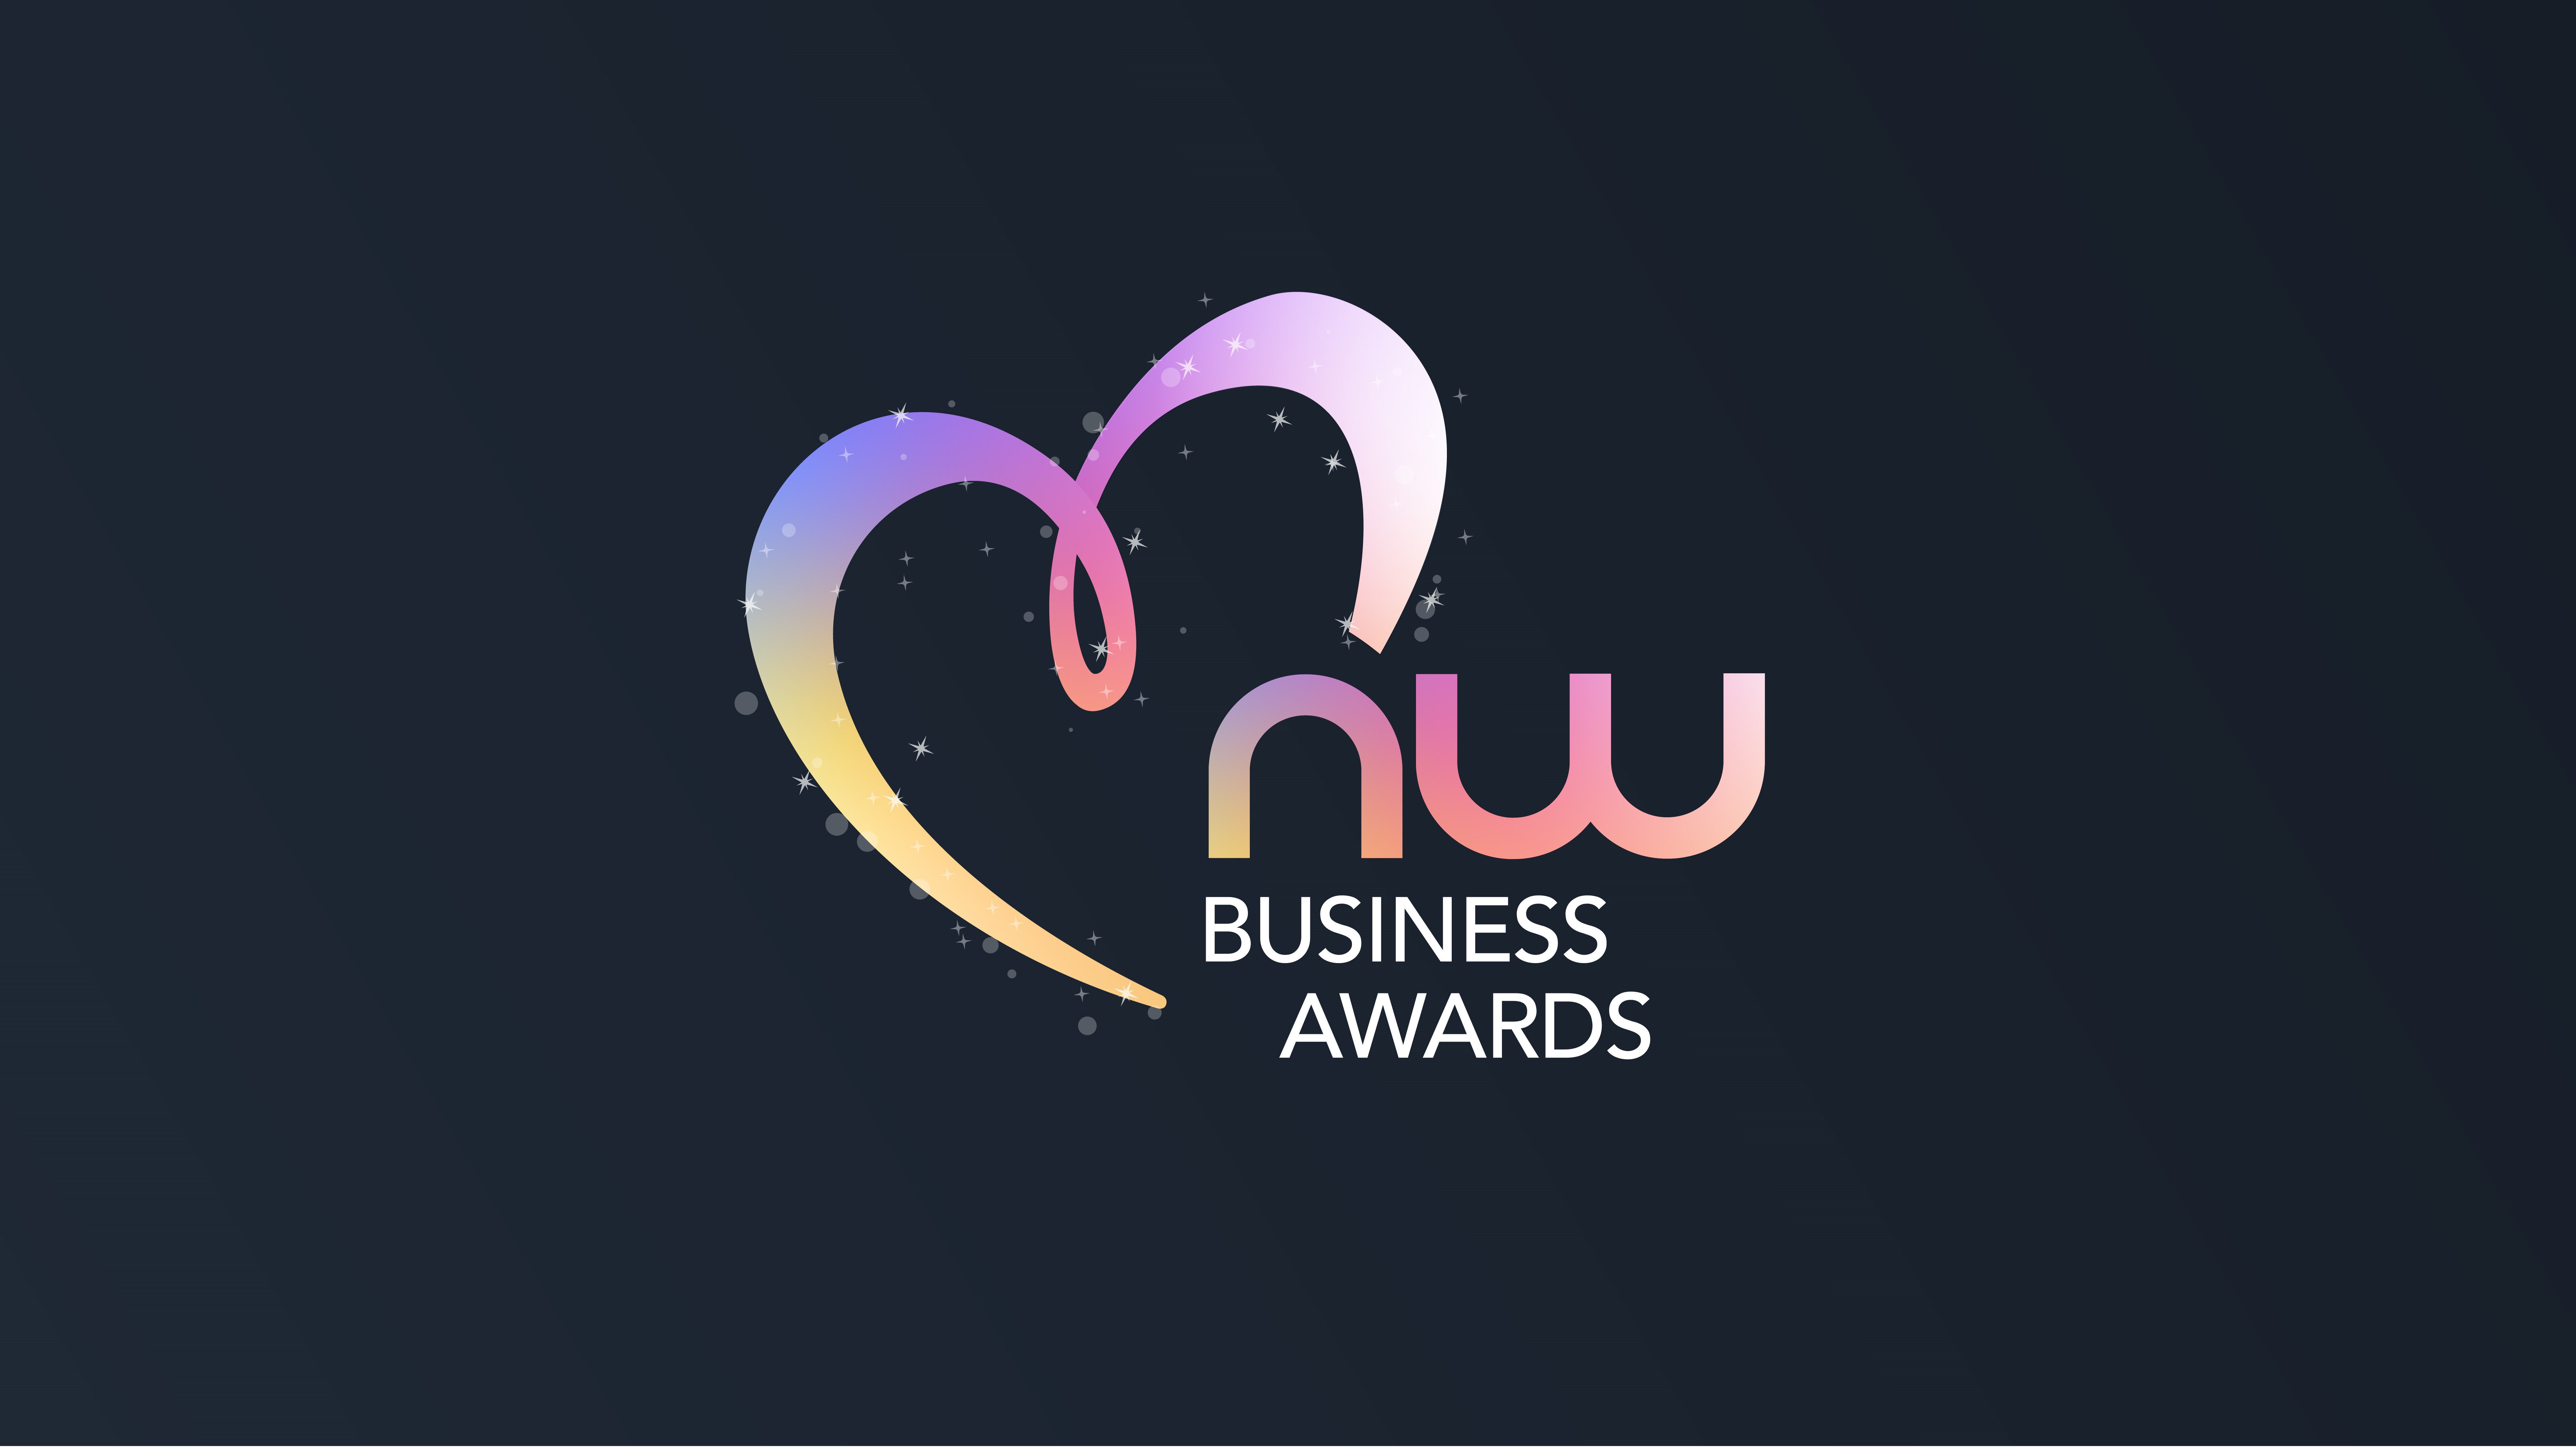 Image shows NW Business awards logo